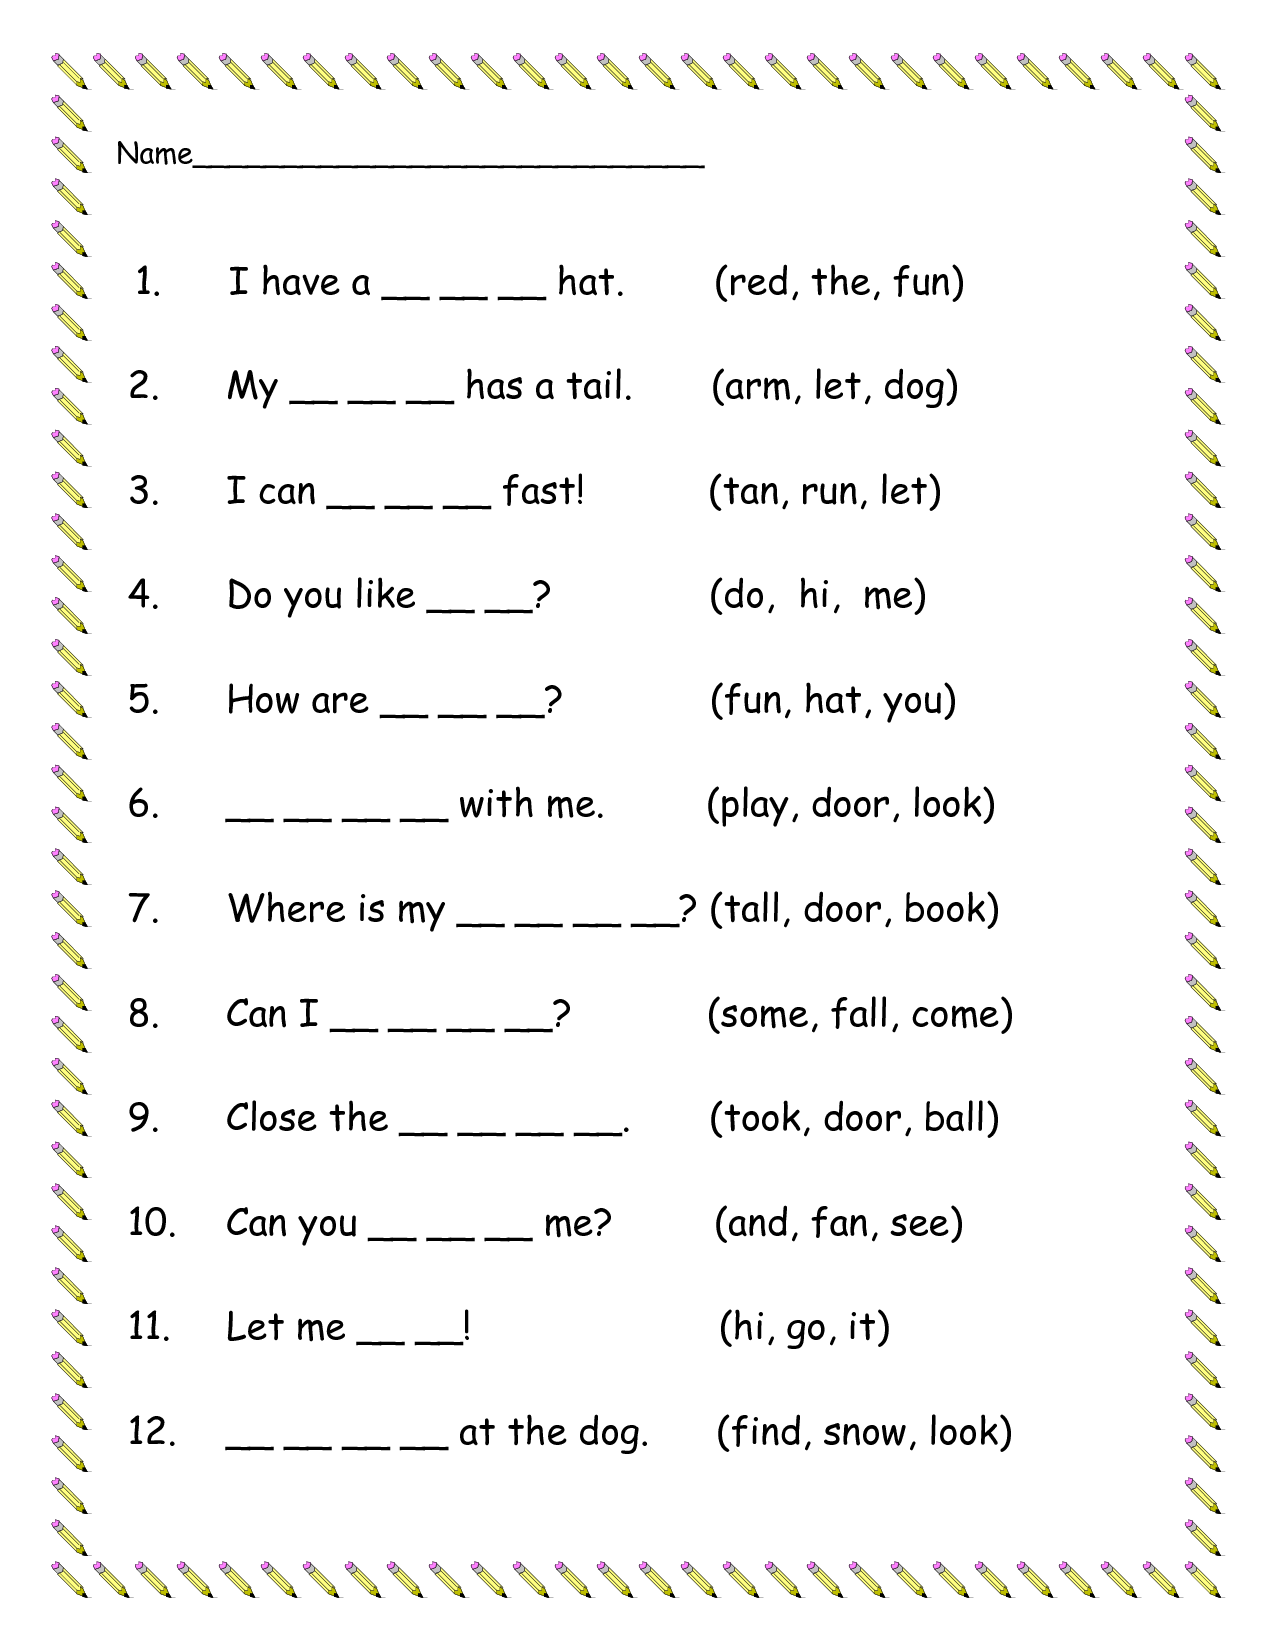 free-printable-sight-words-worksheets-kindergarten-eranelo